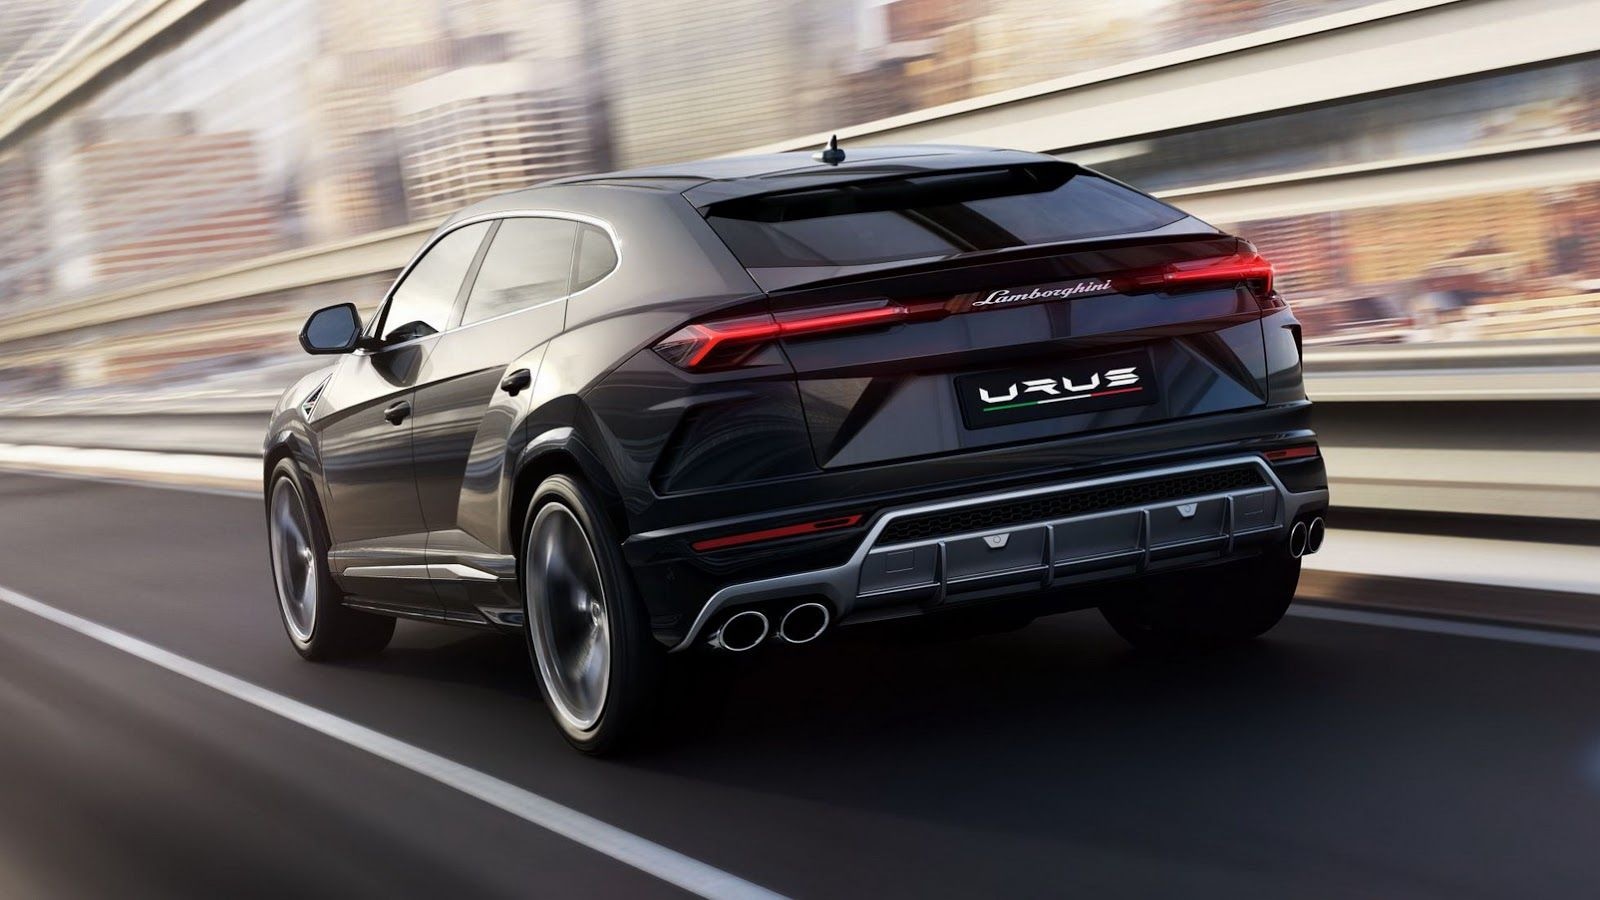 Lamborghini Urus goes 0-60 mph in less than 3 seconds